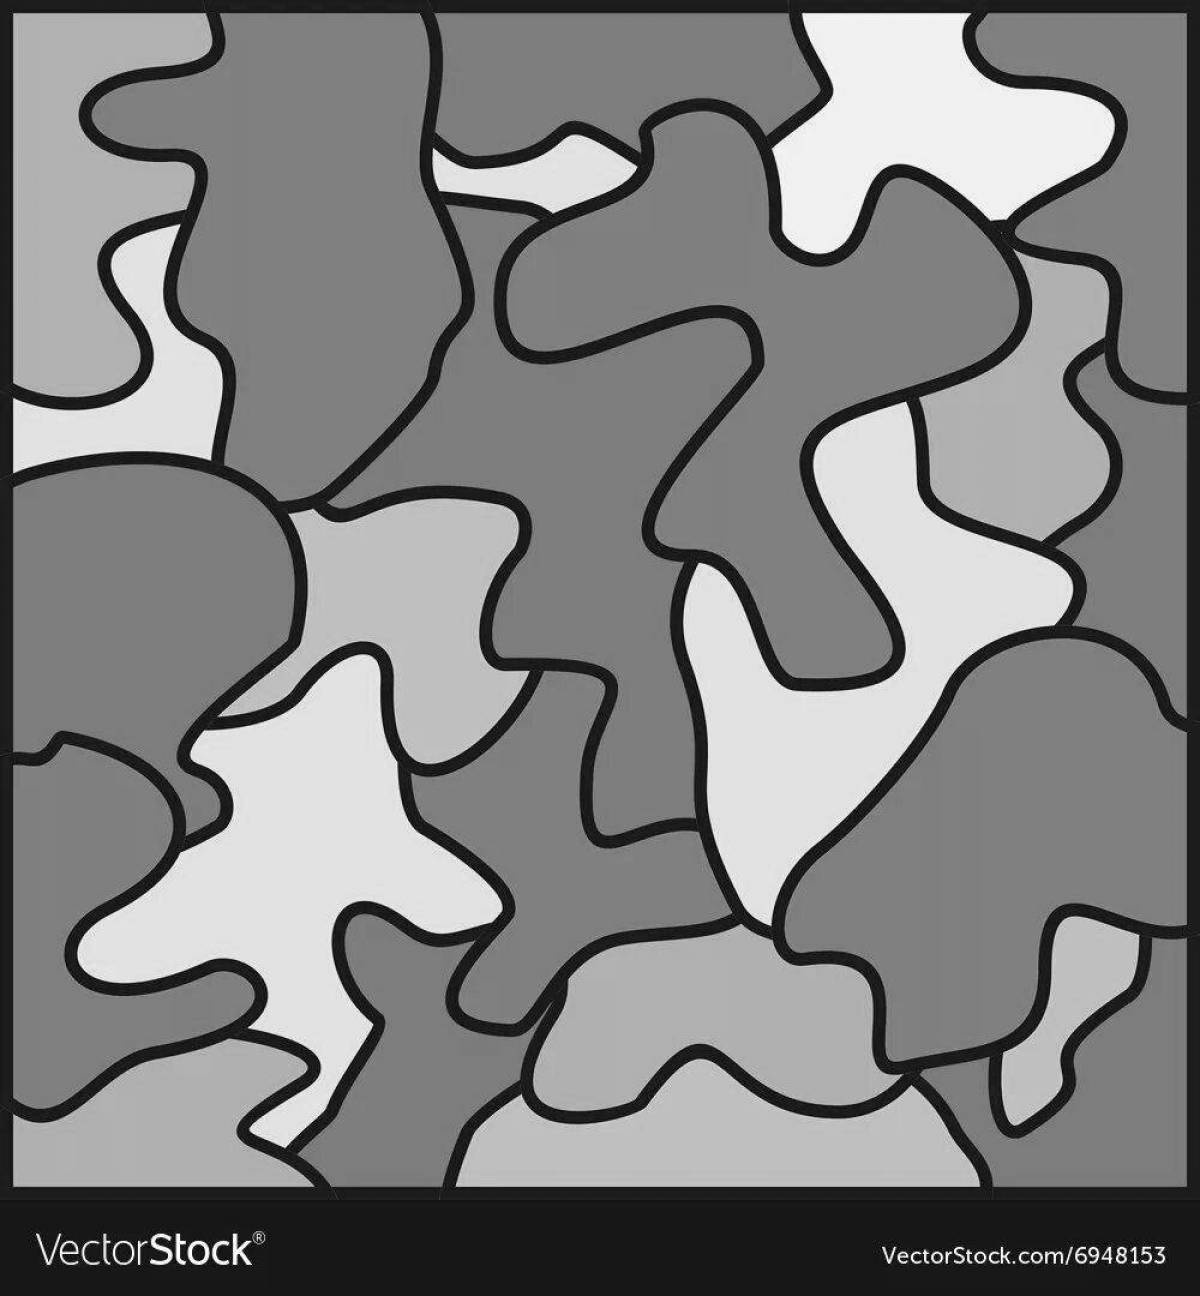 Fun camouflage coloring book